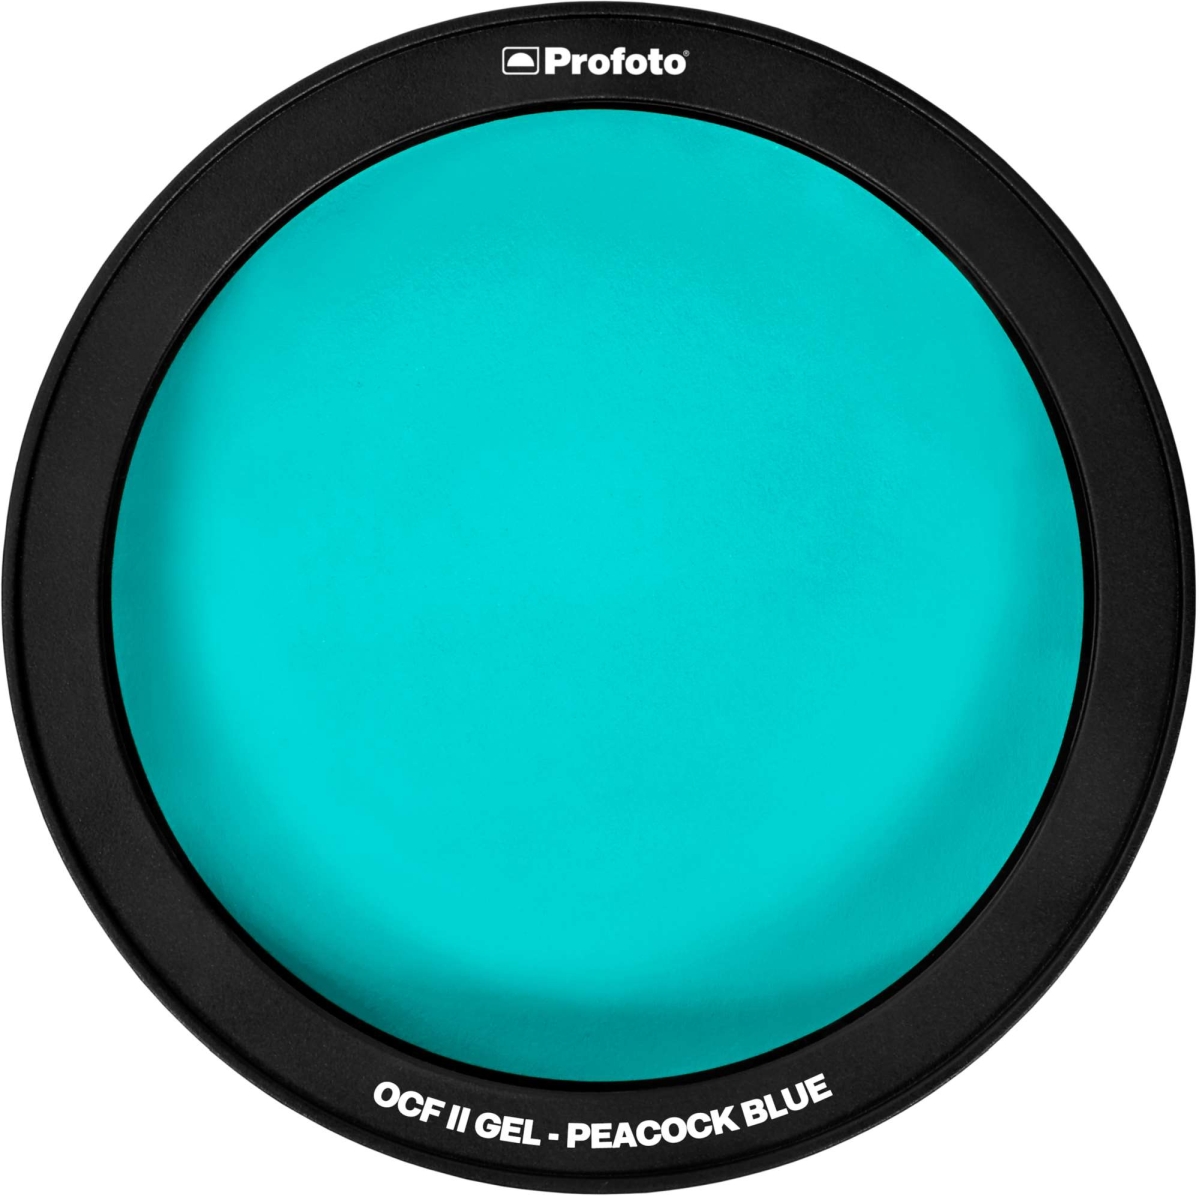 Profoto OCF II Gel Peacock Blue